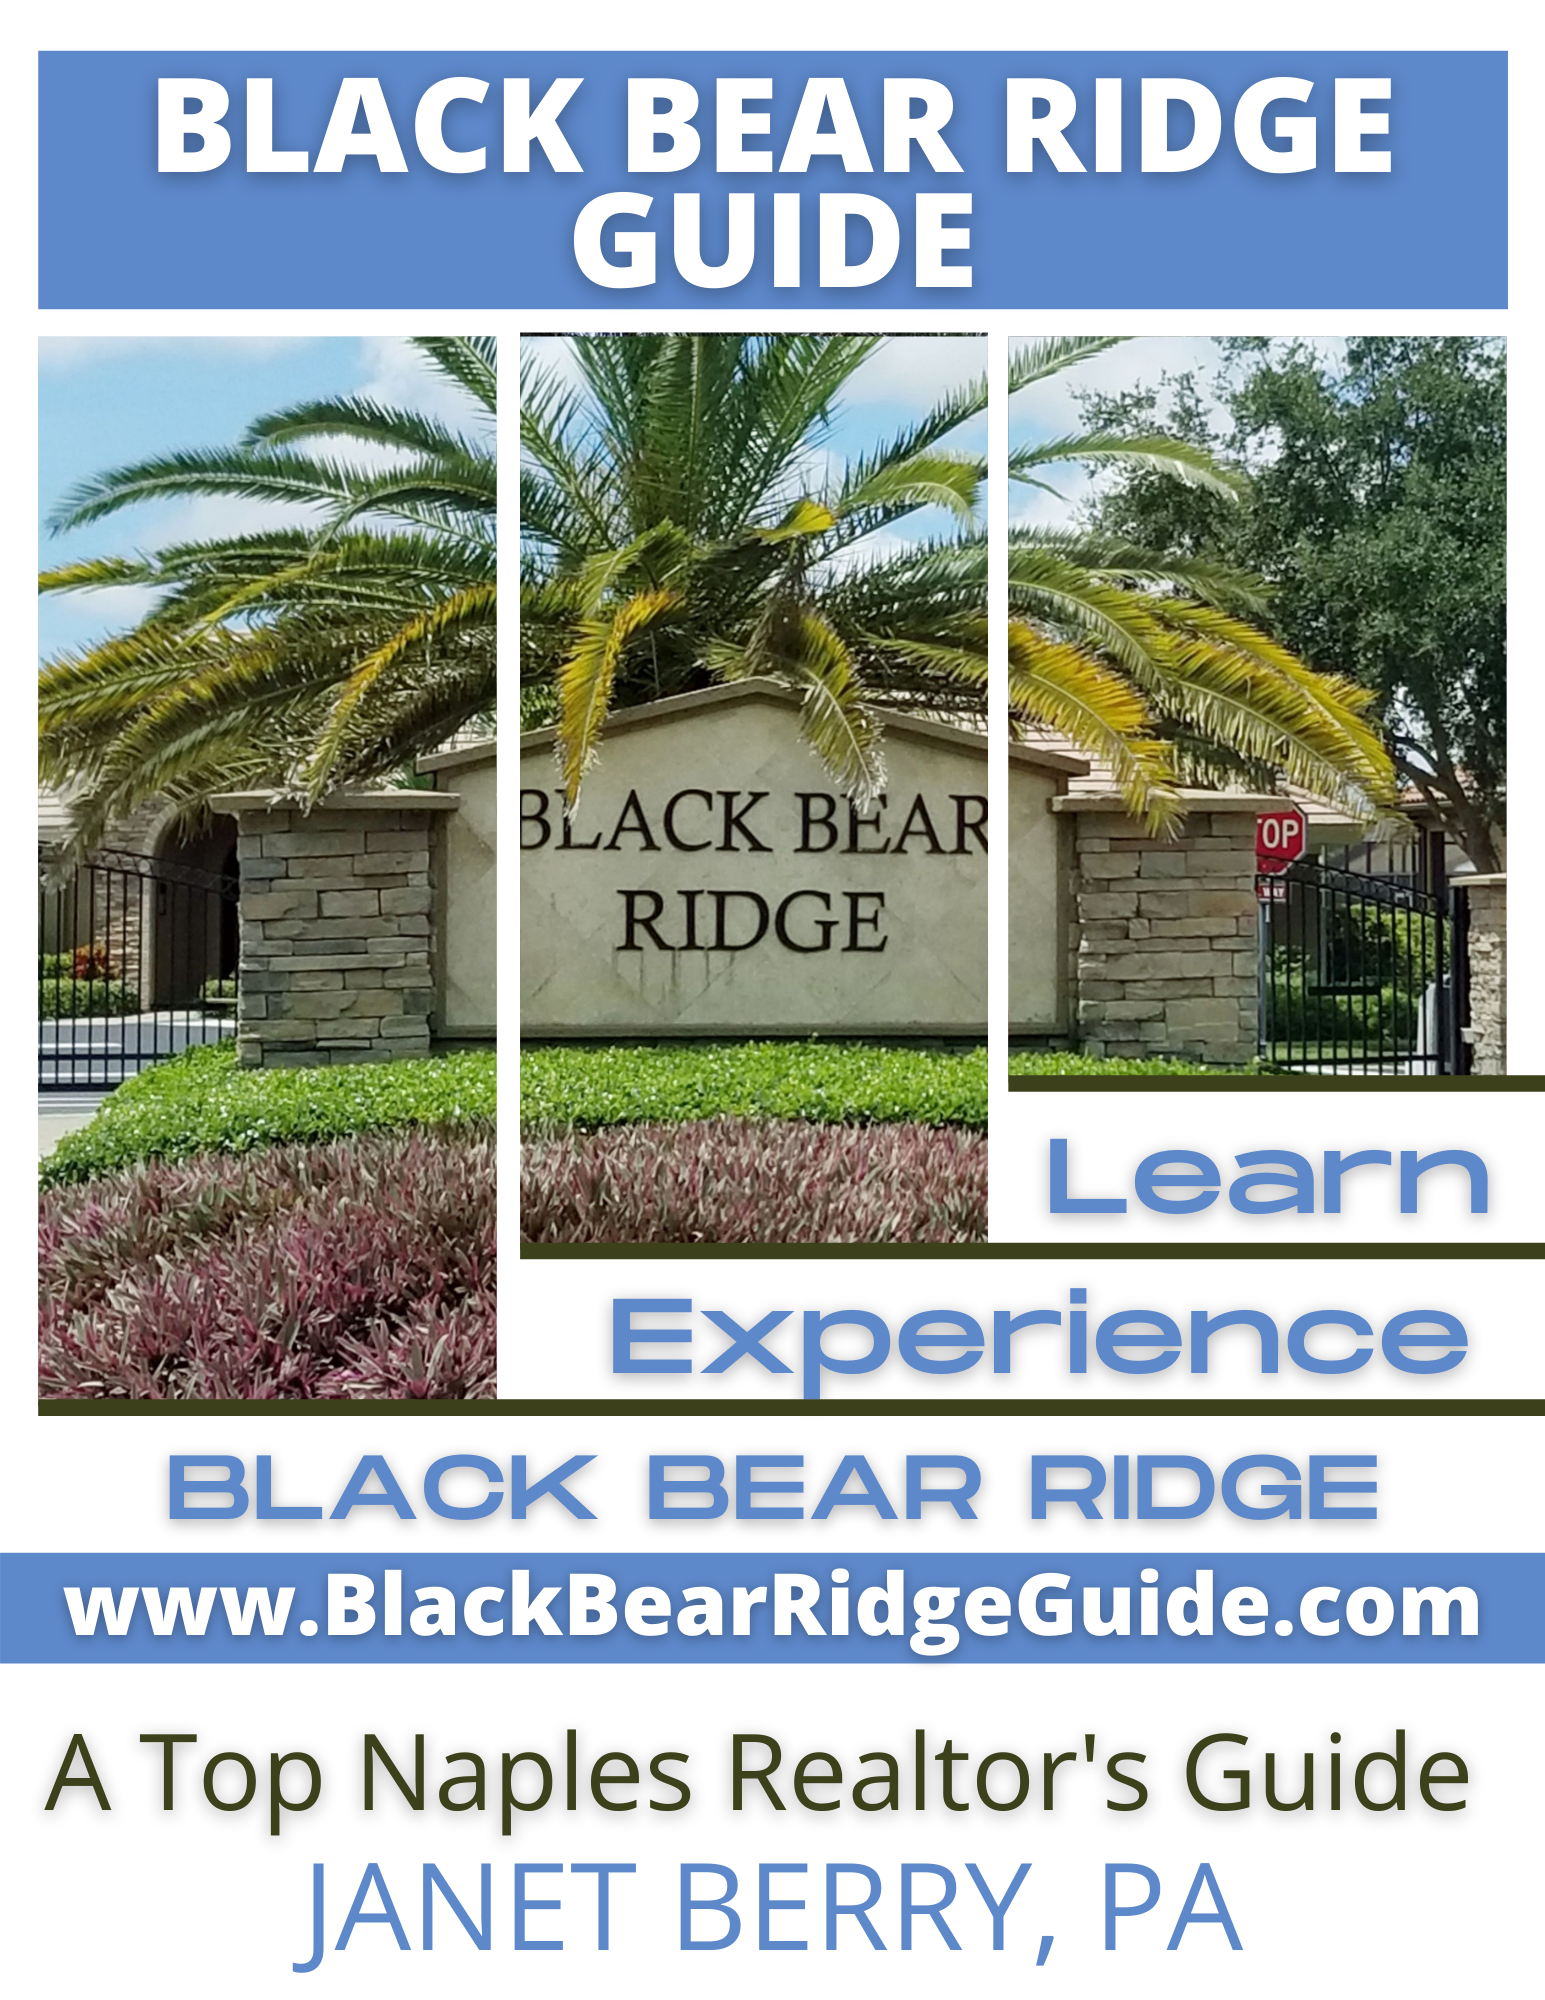 BLACK BEAR RIDGE Guide cover.png